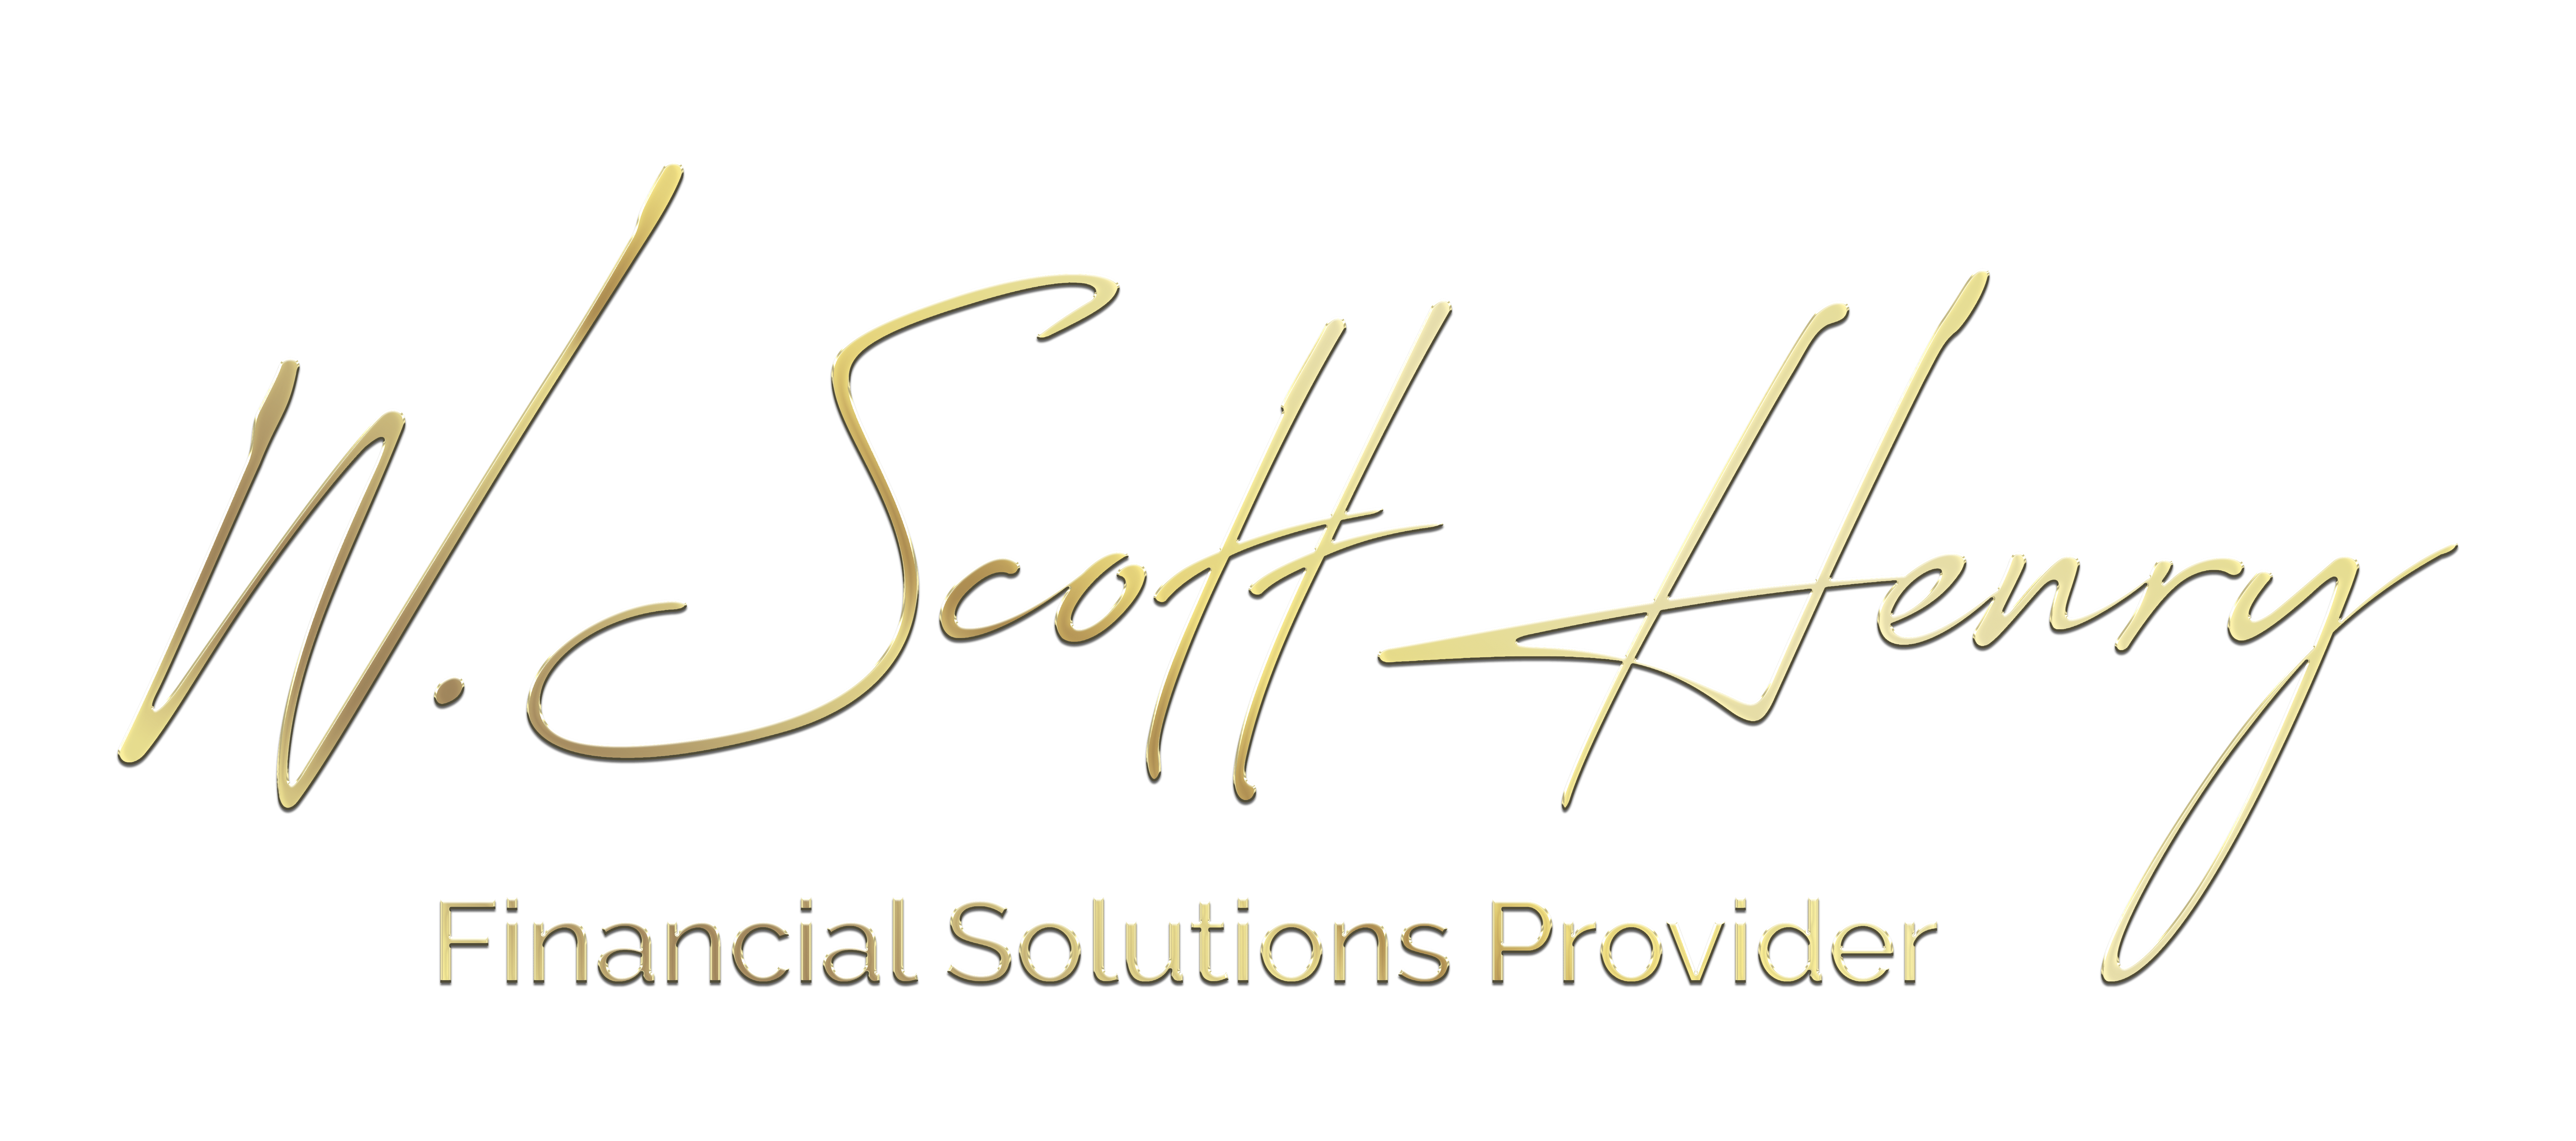 W. Scott Henry                                             Financial Solutions Provider